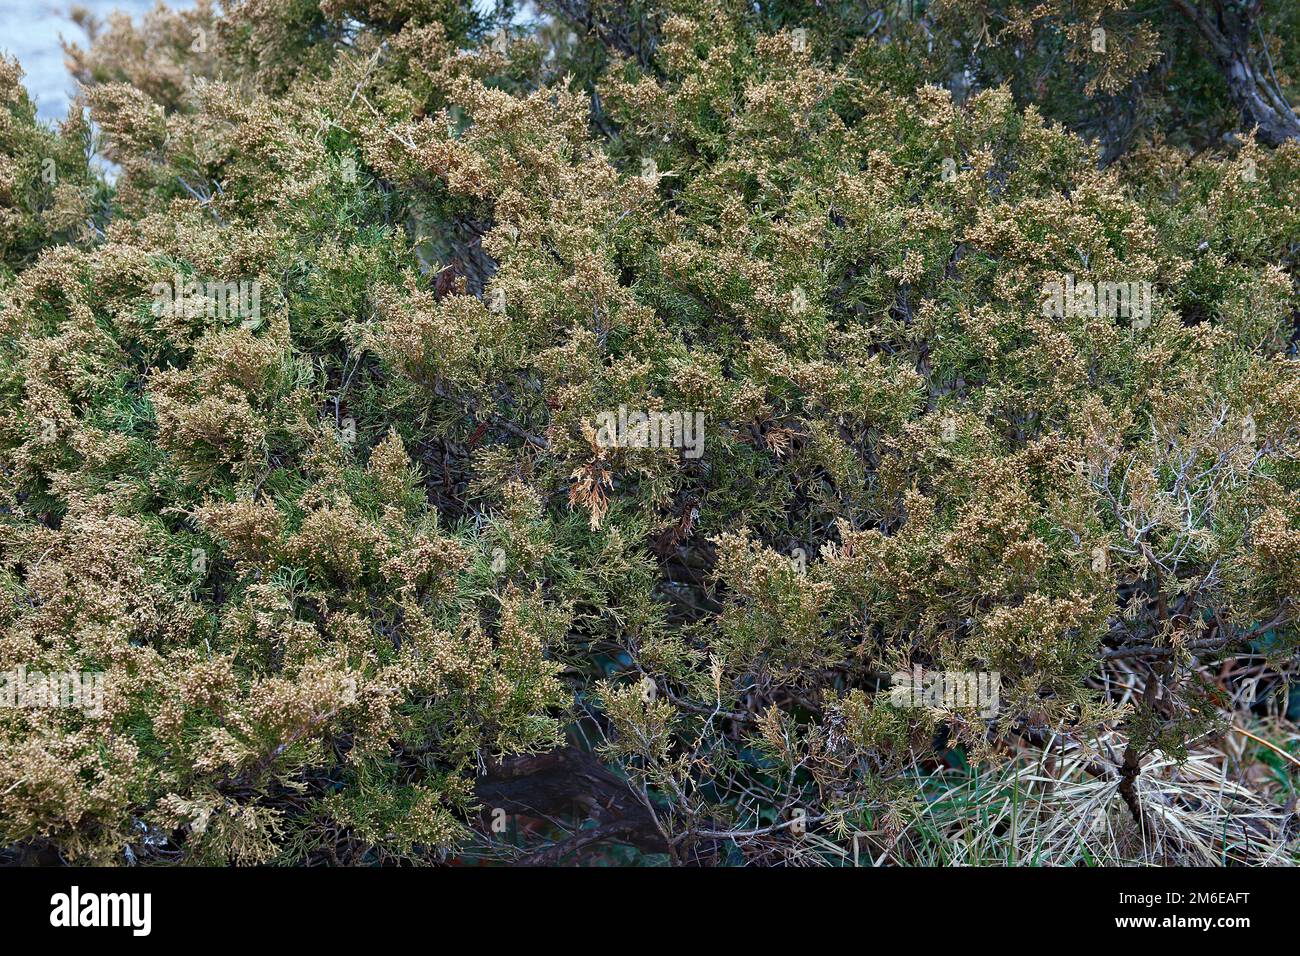 Savin juniper tree with cones Stock Photo